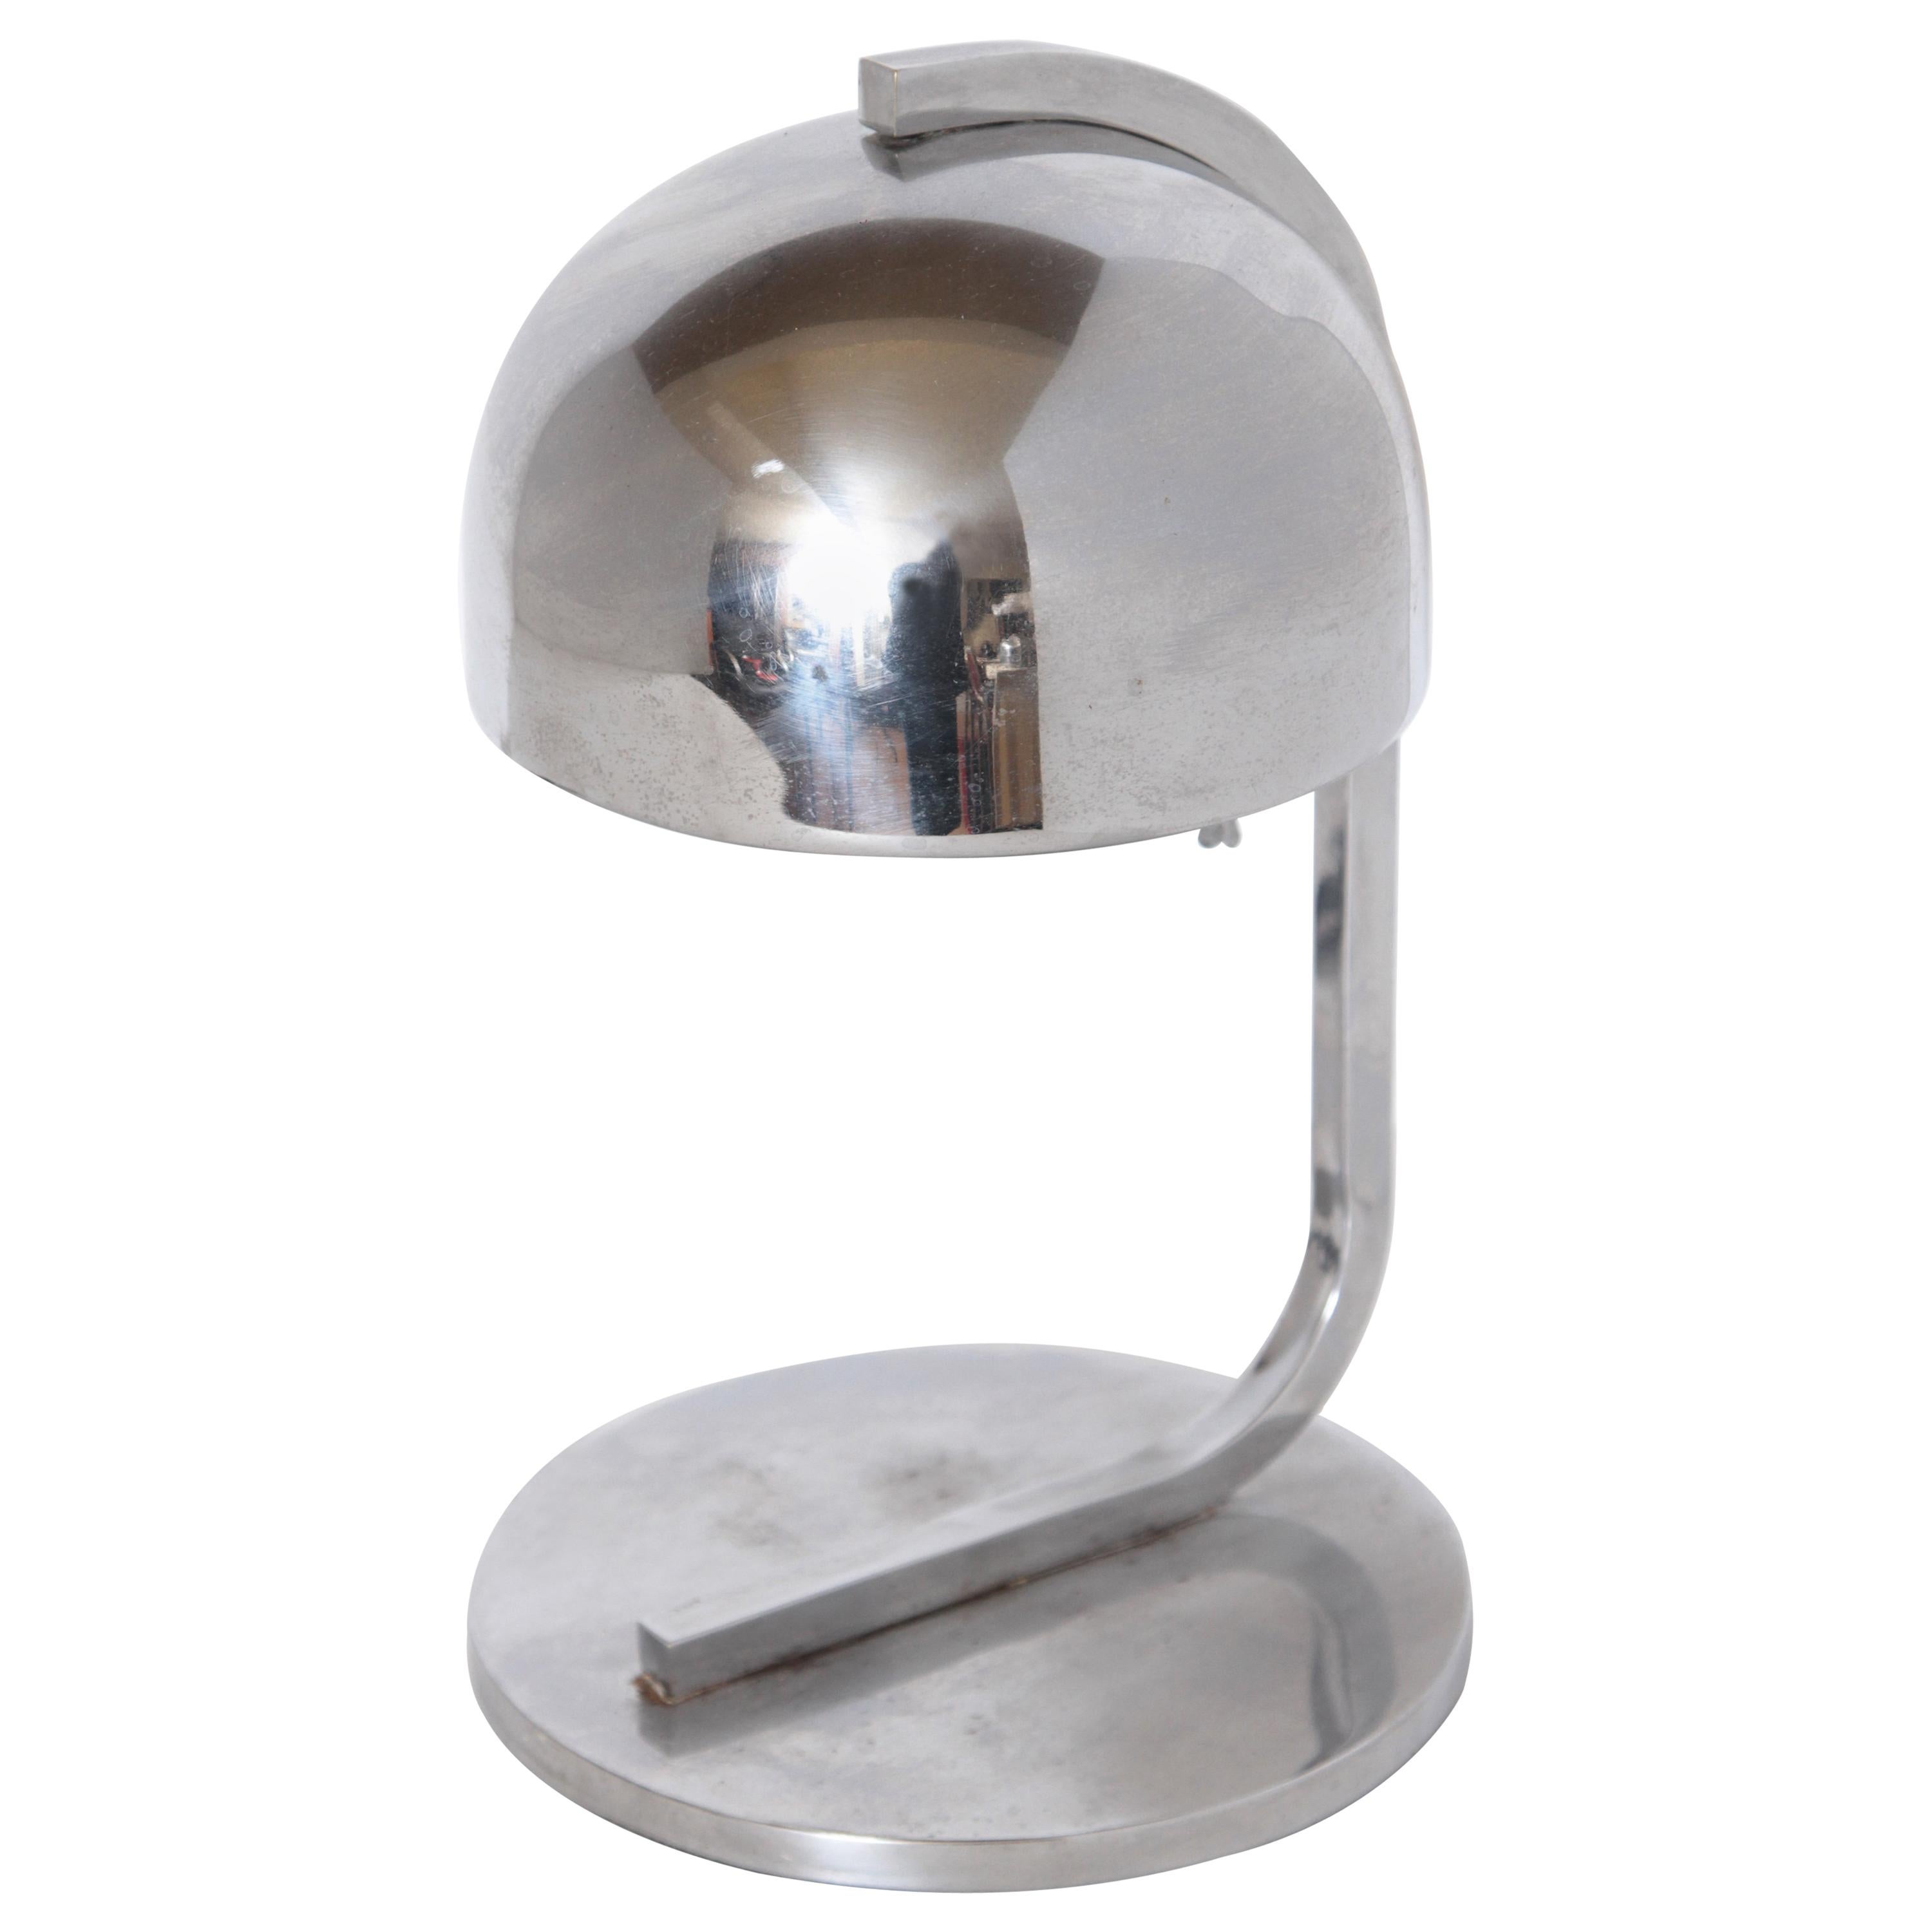 Machine Age Art Deco Streamline Chrome Table Lamp in Donald Deskey Manner